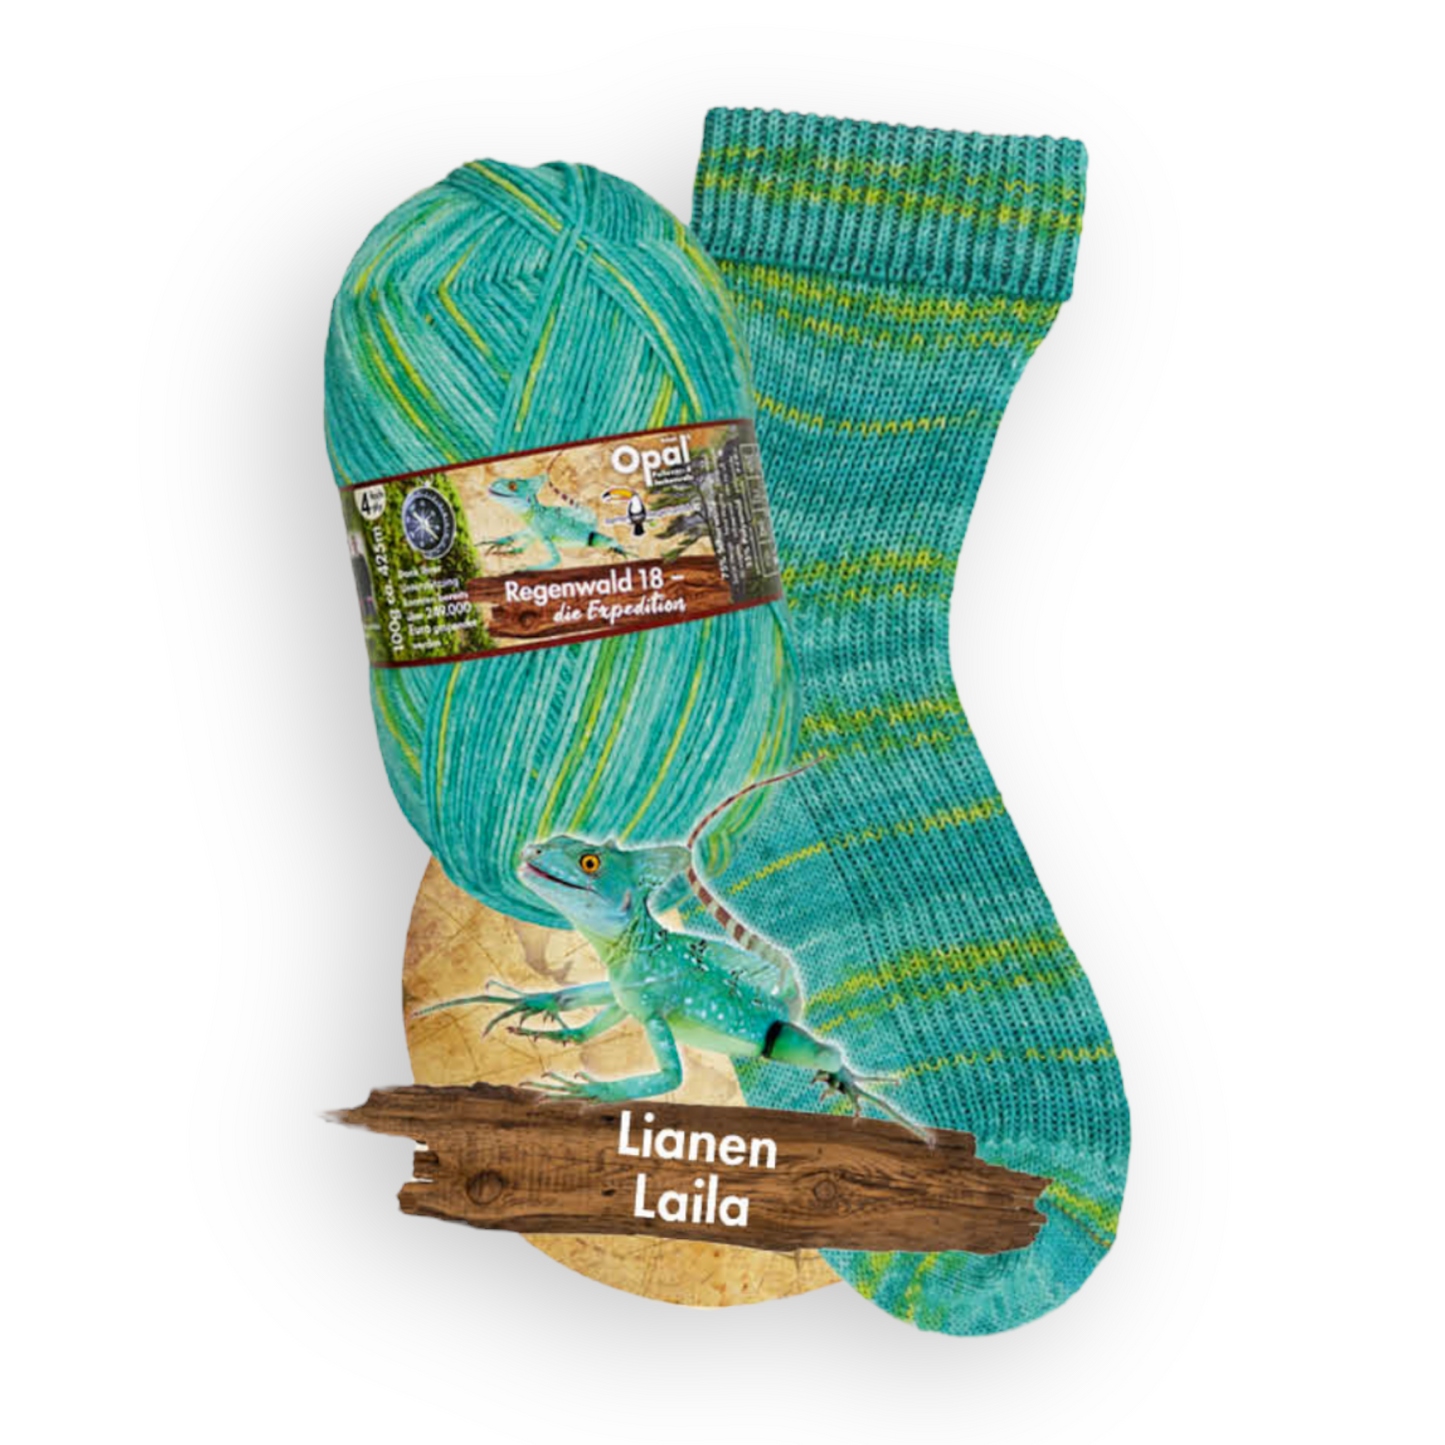 Opal Sock Yarn | Rainforest 18 Collection